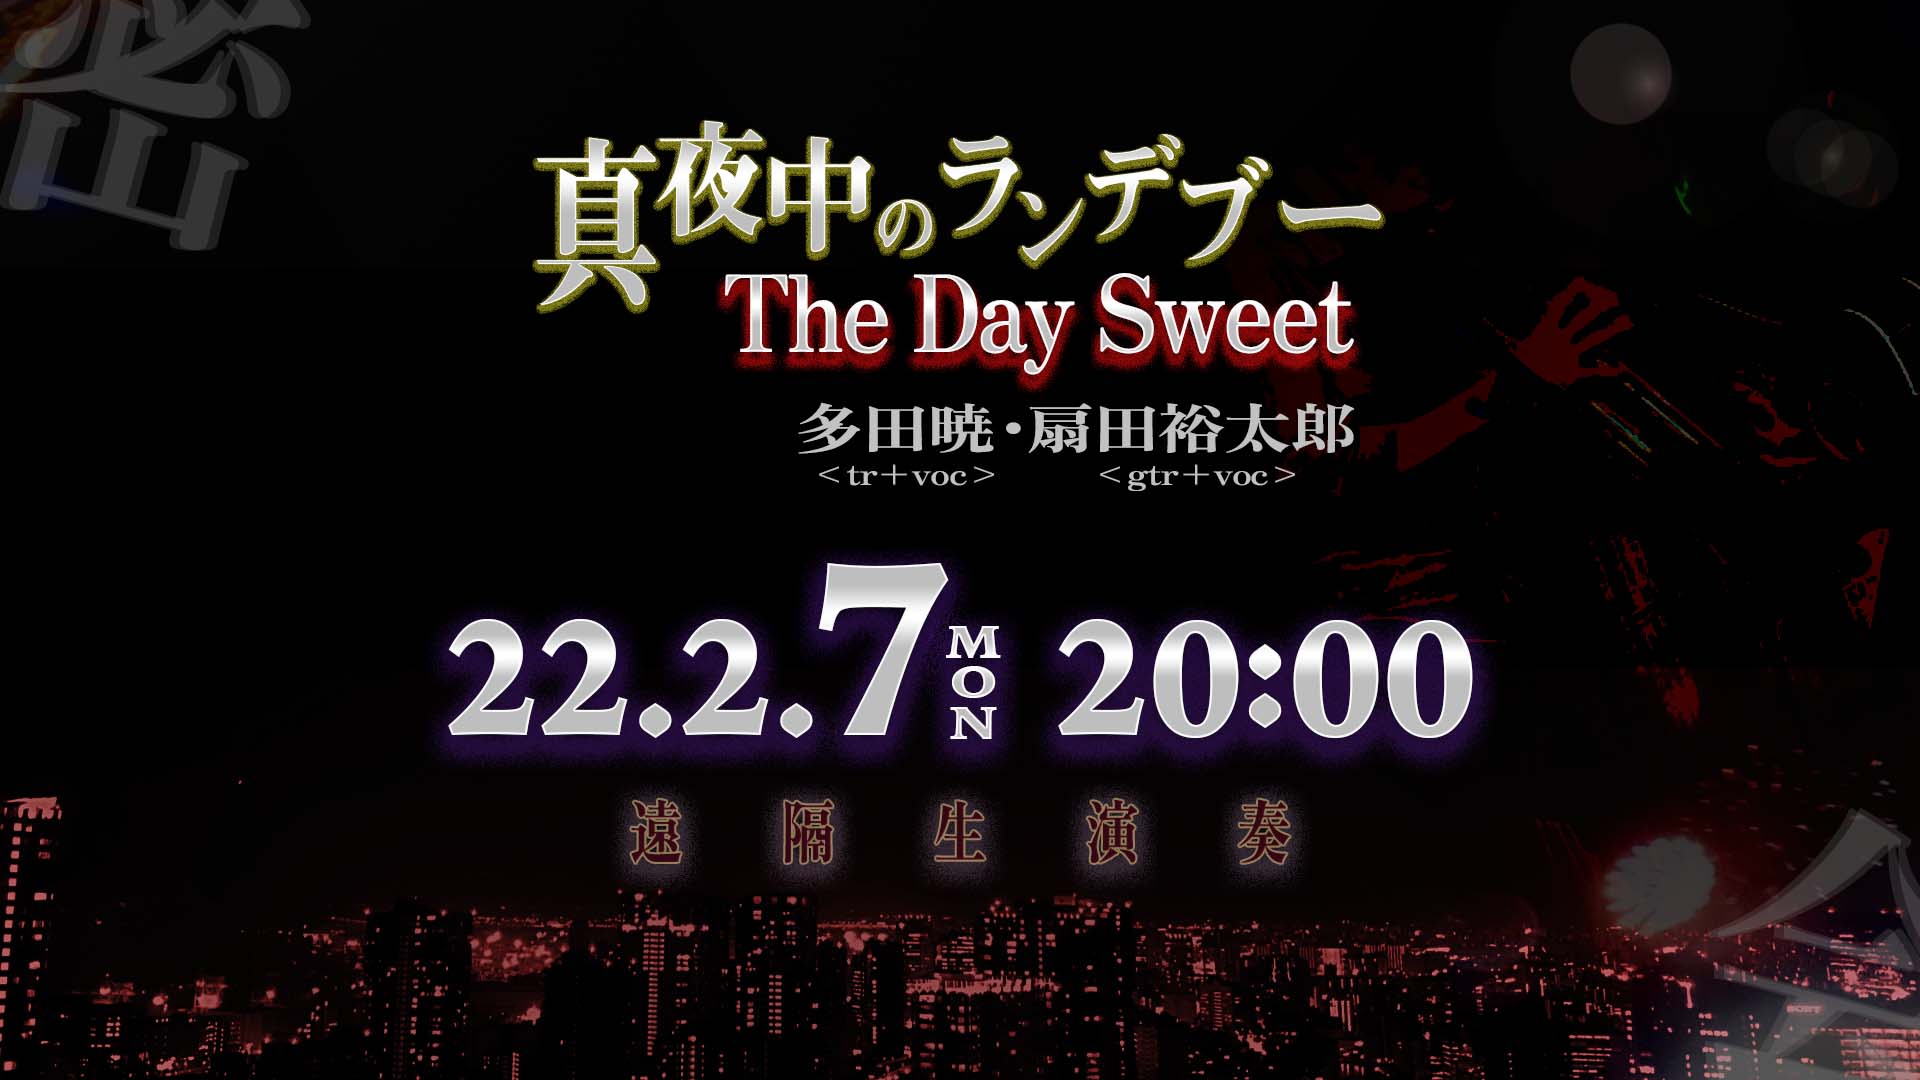 The Day Sweet 〜真夜中のランデブー〜 遠隔生配信ライブ Vol.8